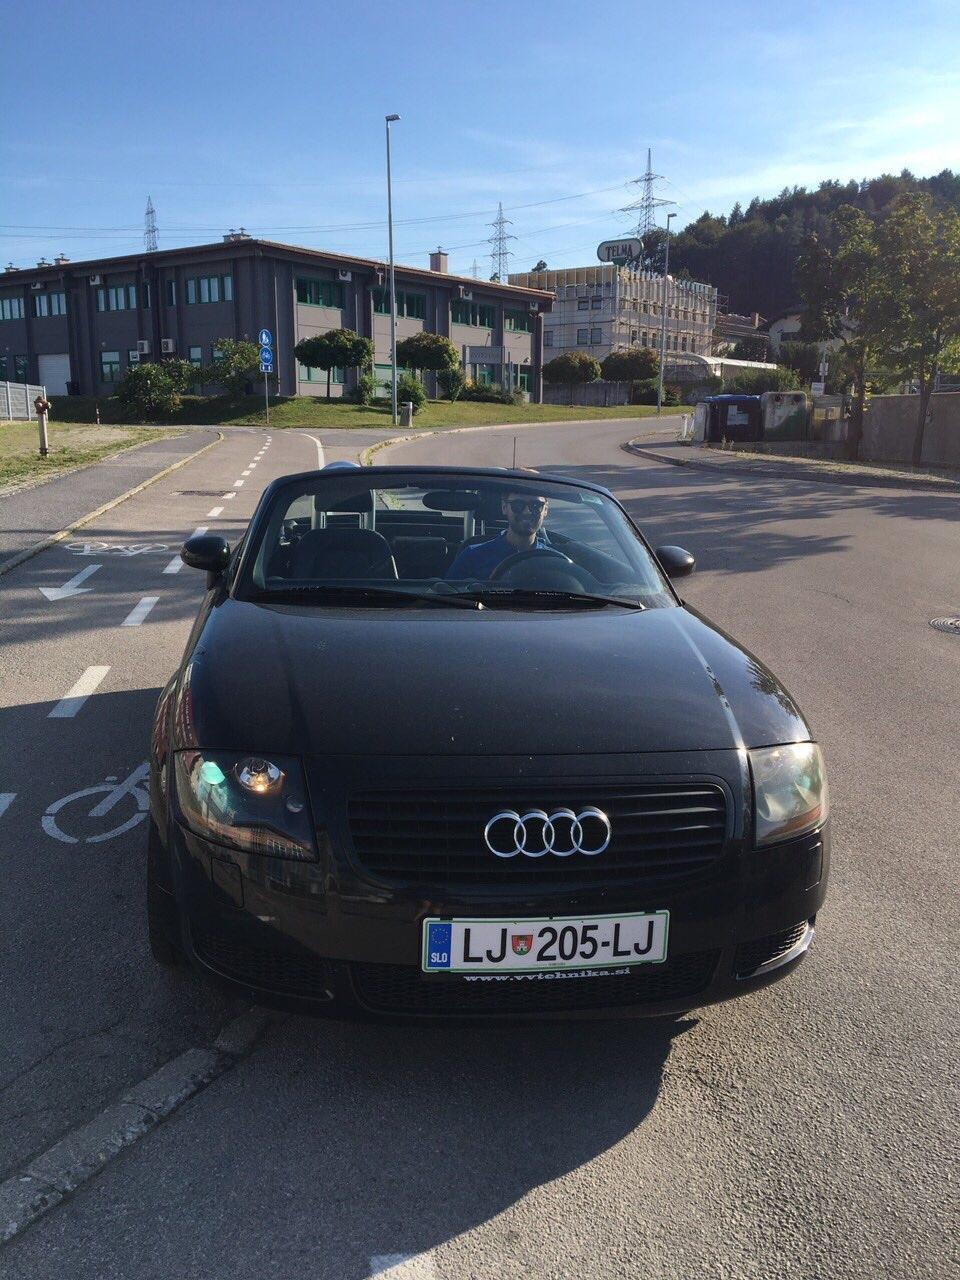 Audi TT Roaster - Bor i Slovenien derfor nummerpladen billede 1